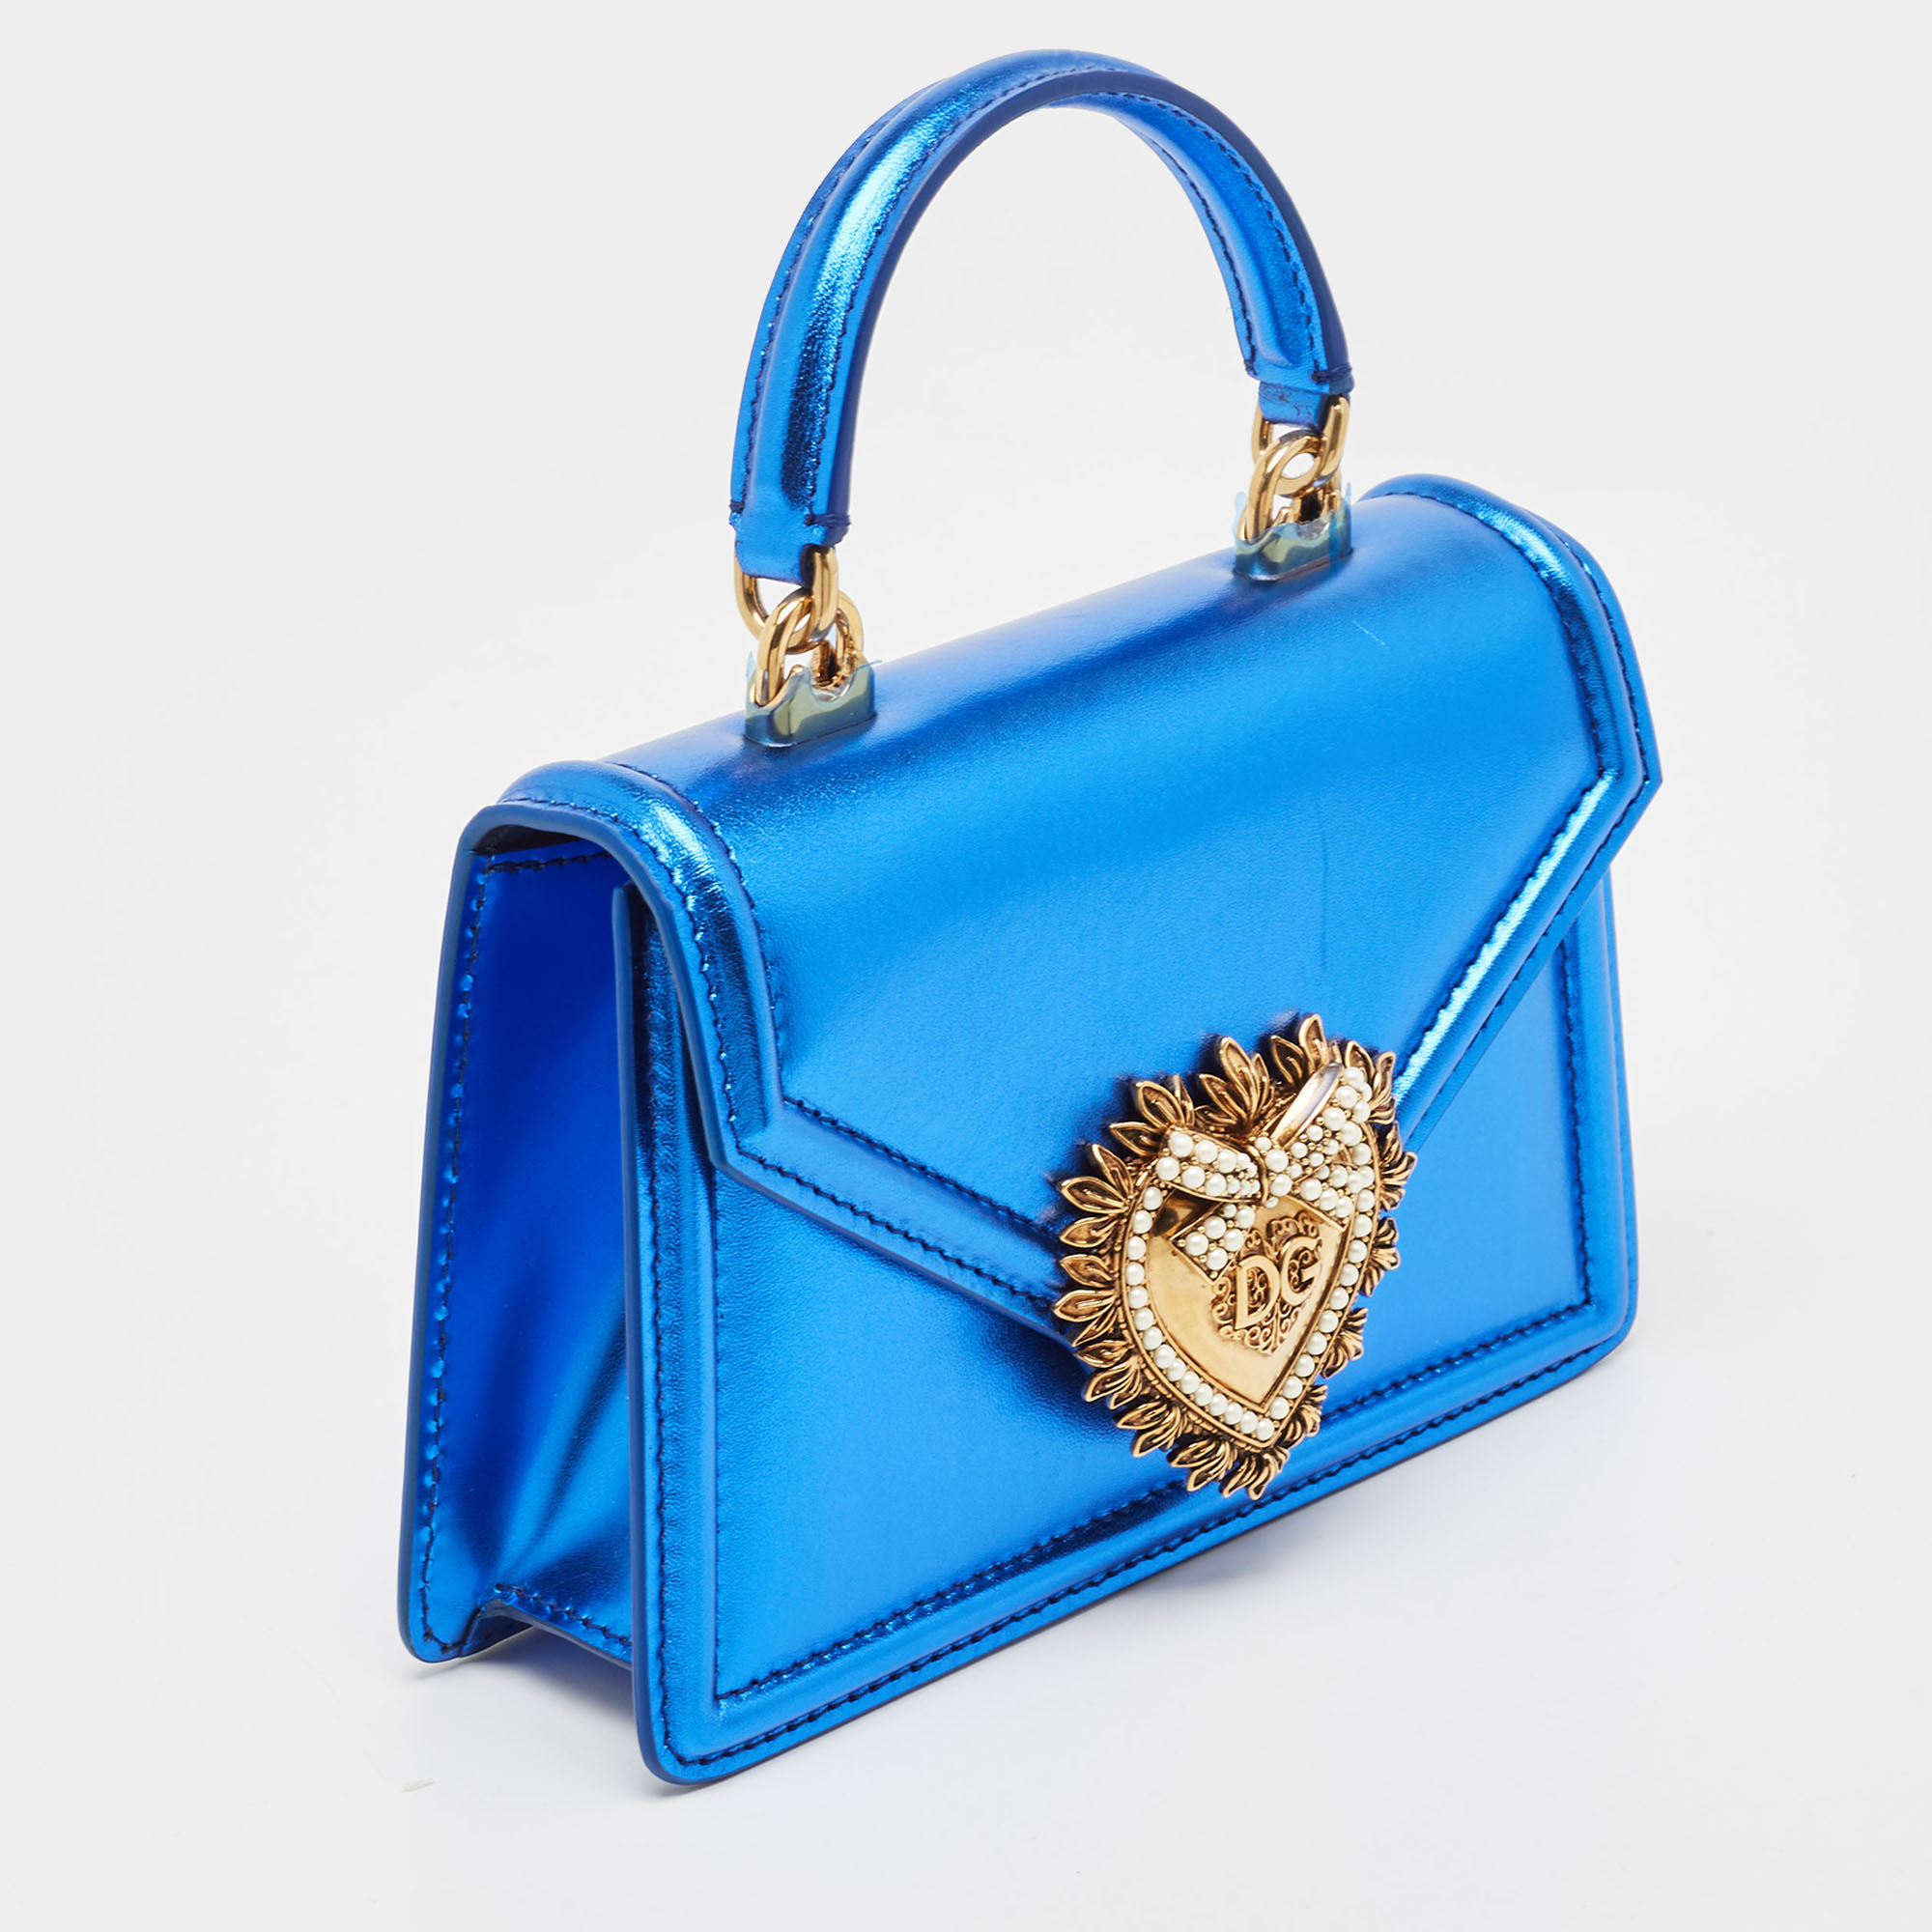 Dolce & Gabbana Metallic Blue Leather Small Devotion Top Handle Bag